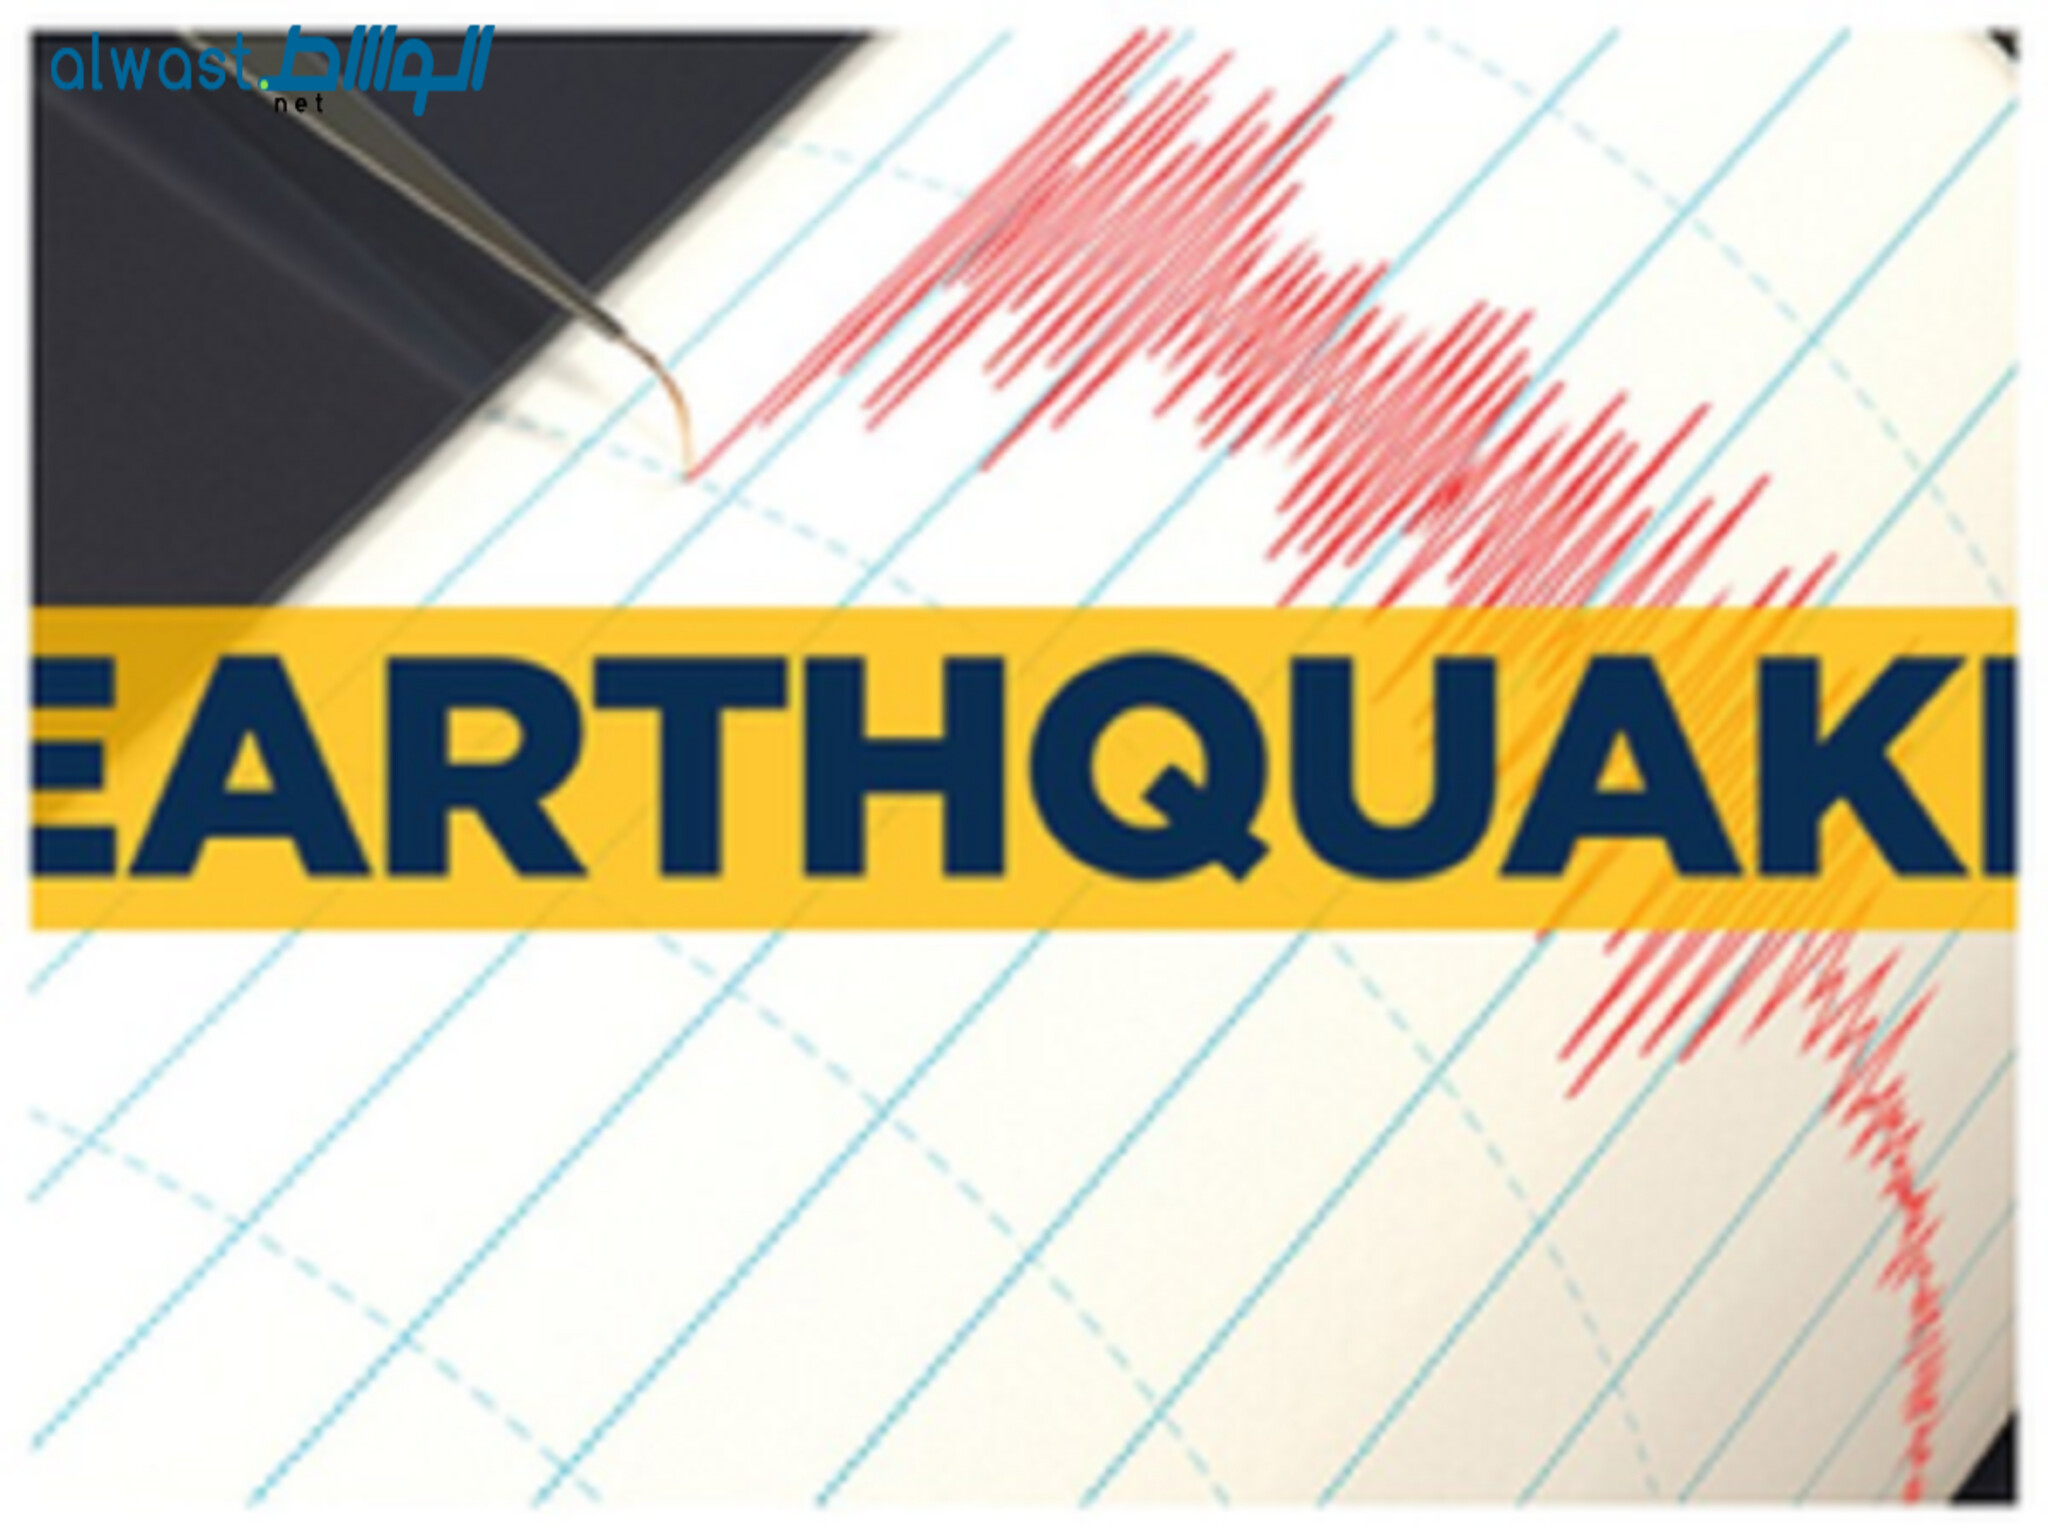 Japan: A Magnitude 6.5 Earthquake Strikes Island